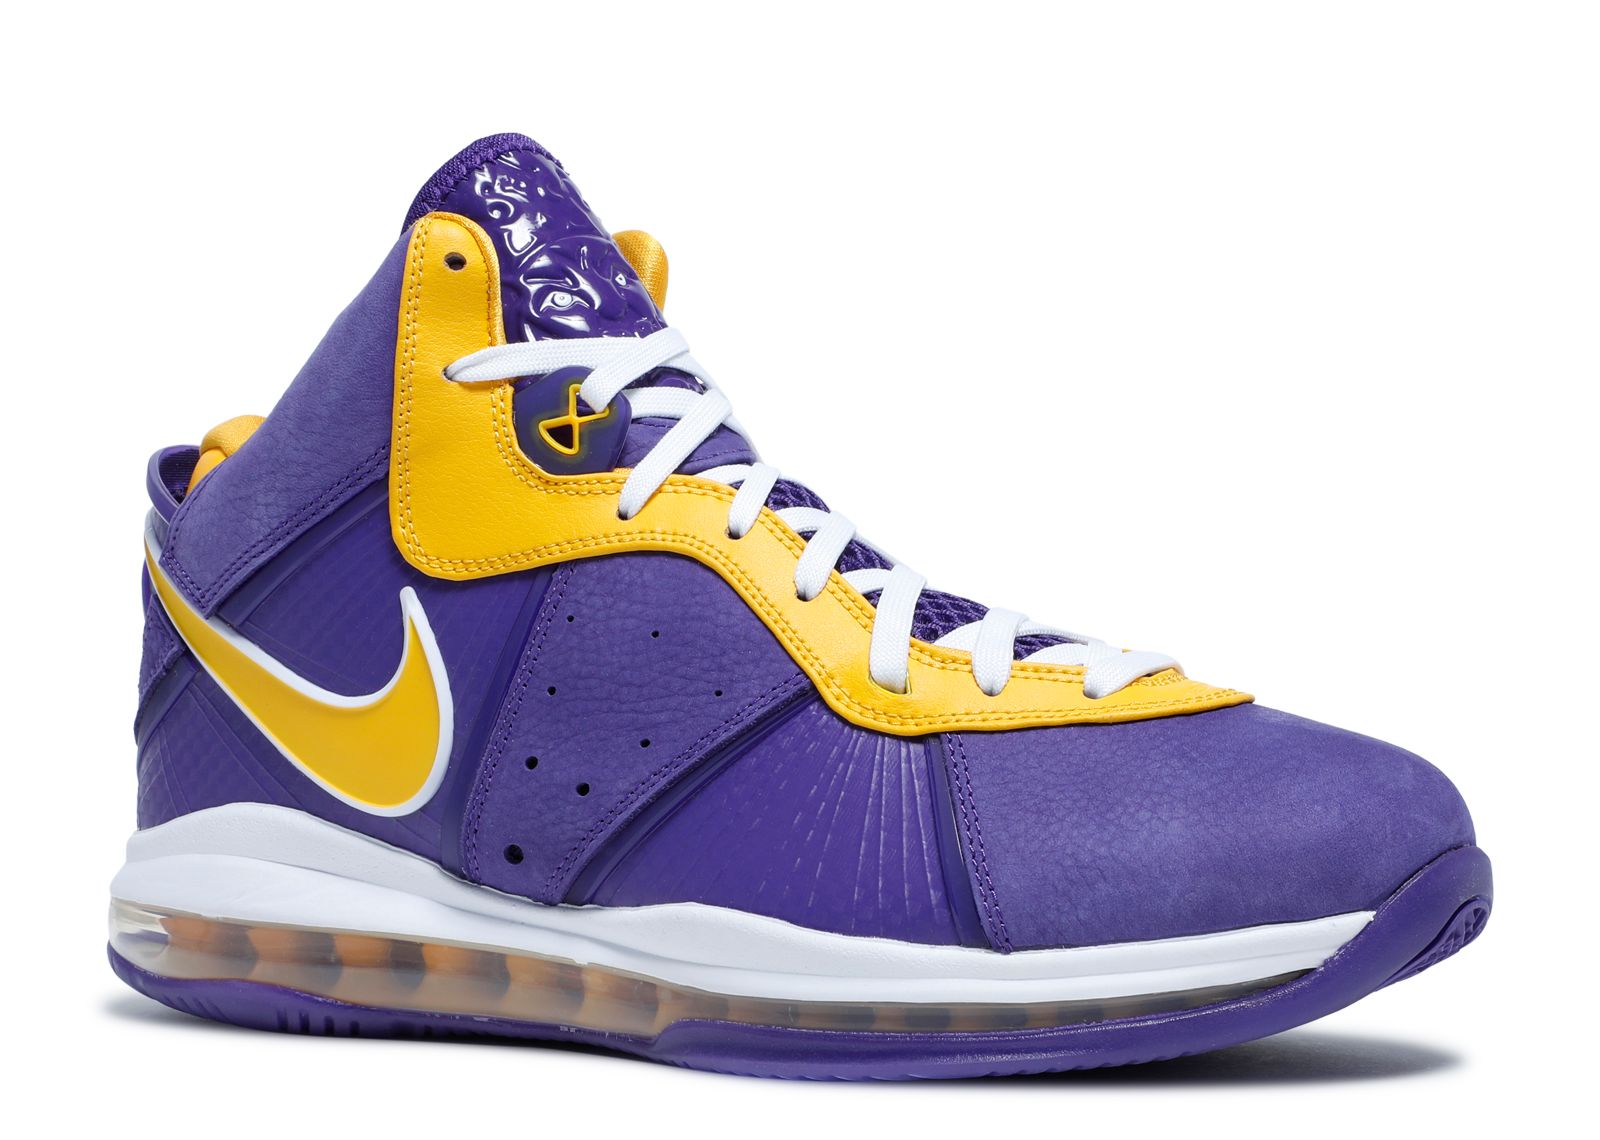 Coming Soon: Nike LeBron 8 Lakers